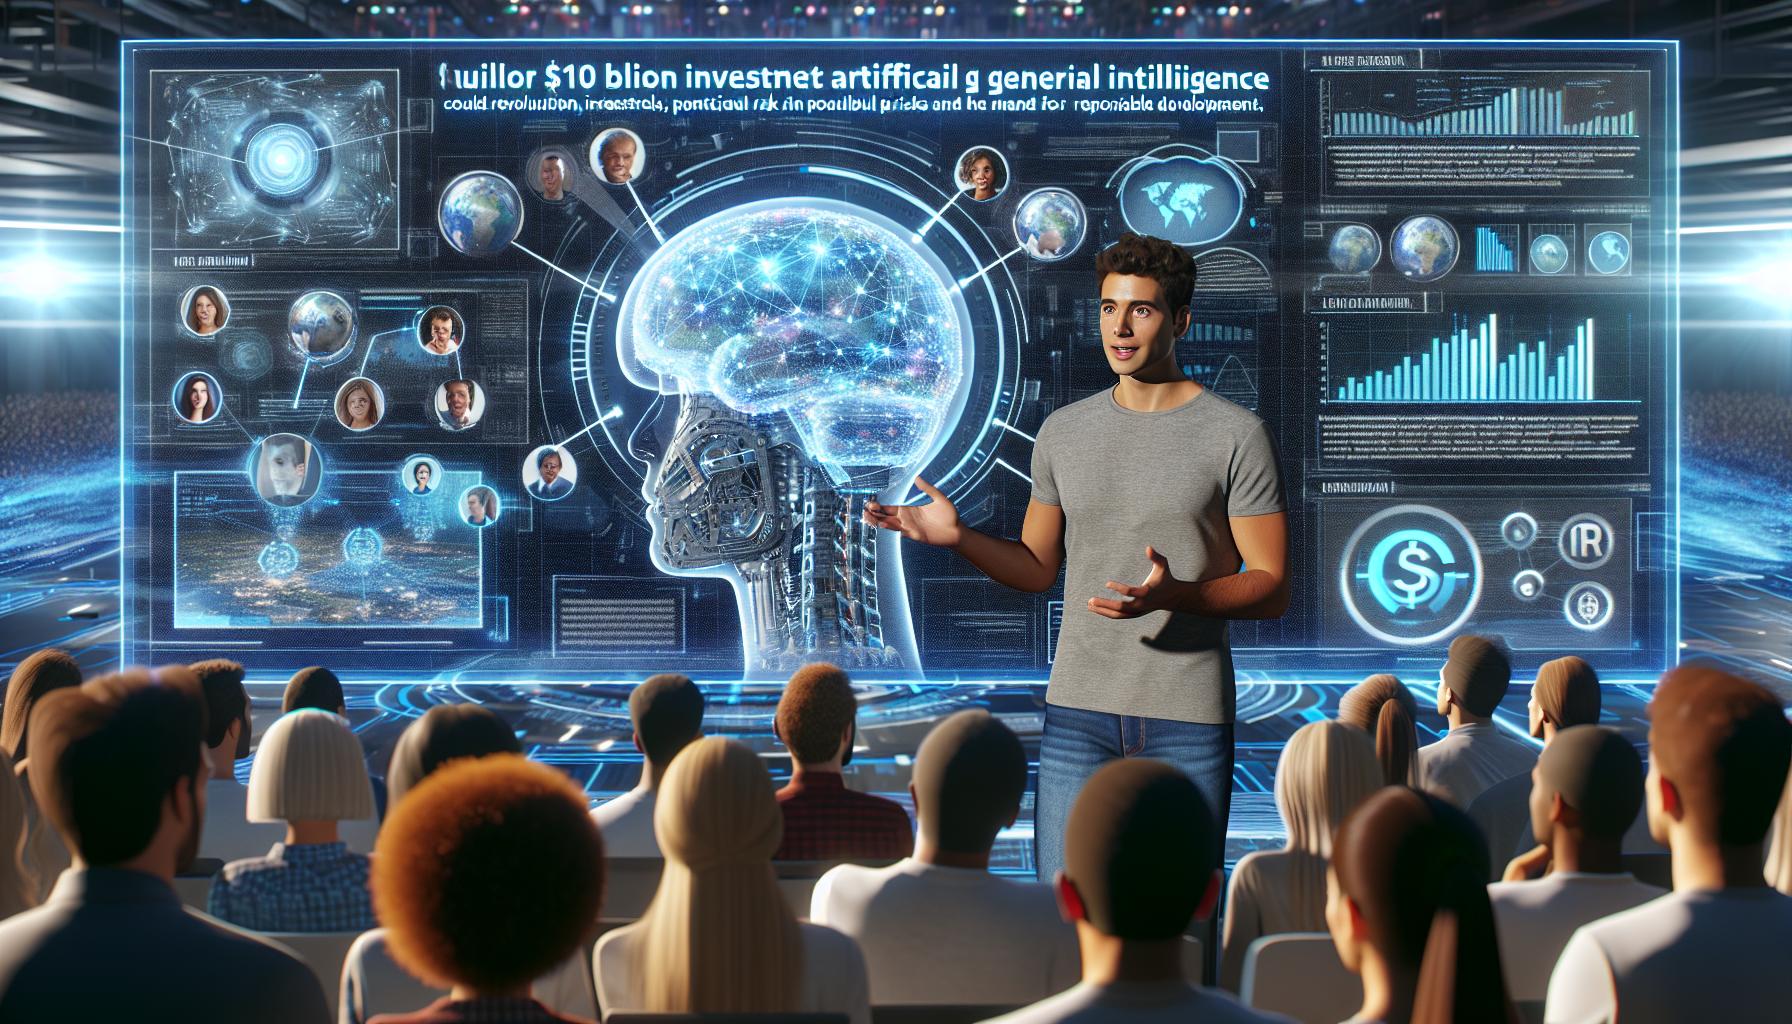 Artificial general intelligence: AGI surpasses human capability, says Meta CEO | FinOracle